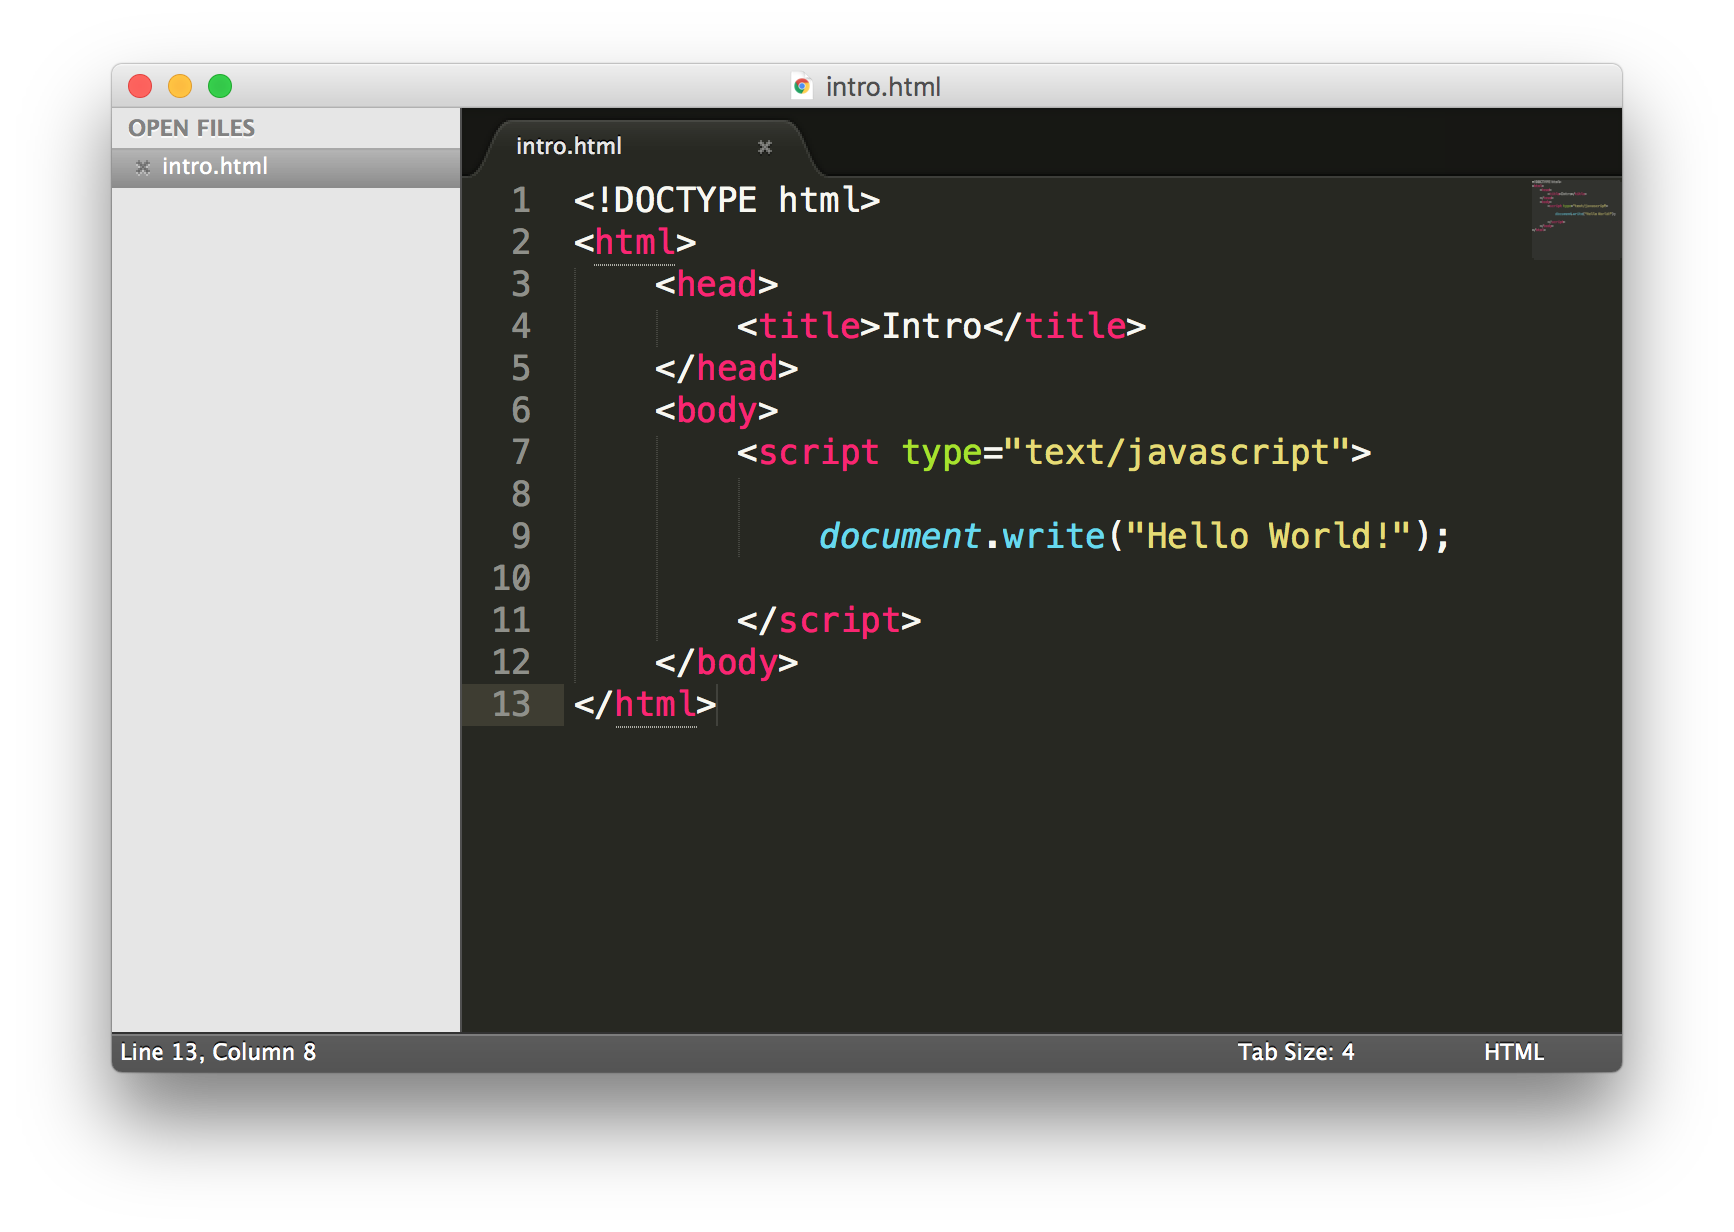 Скрипты html. Скрипт CSS. Скрипт js в html. Тег script в html. Скрипт руками